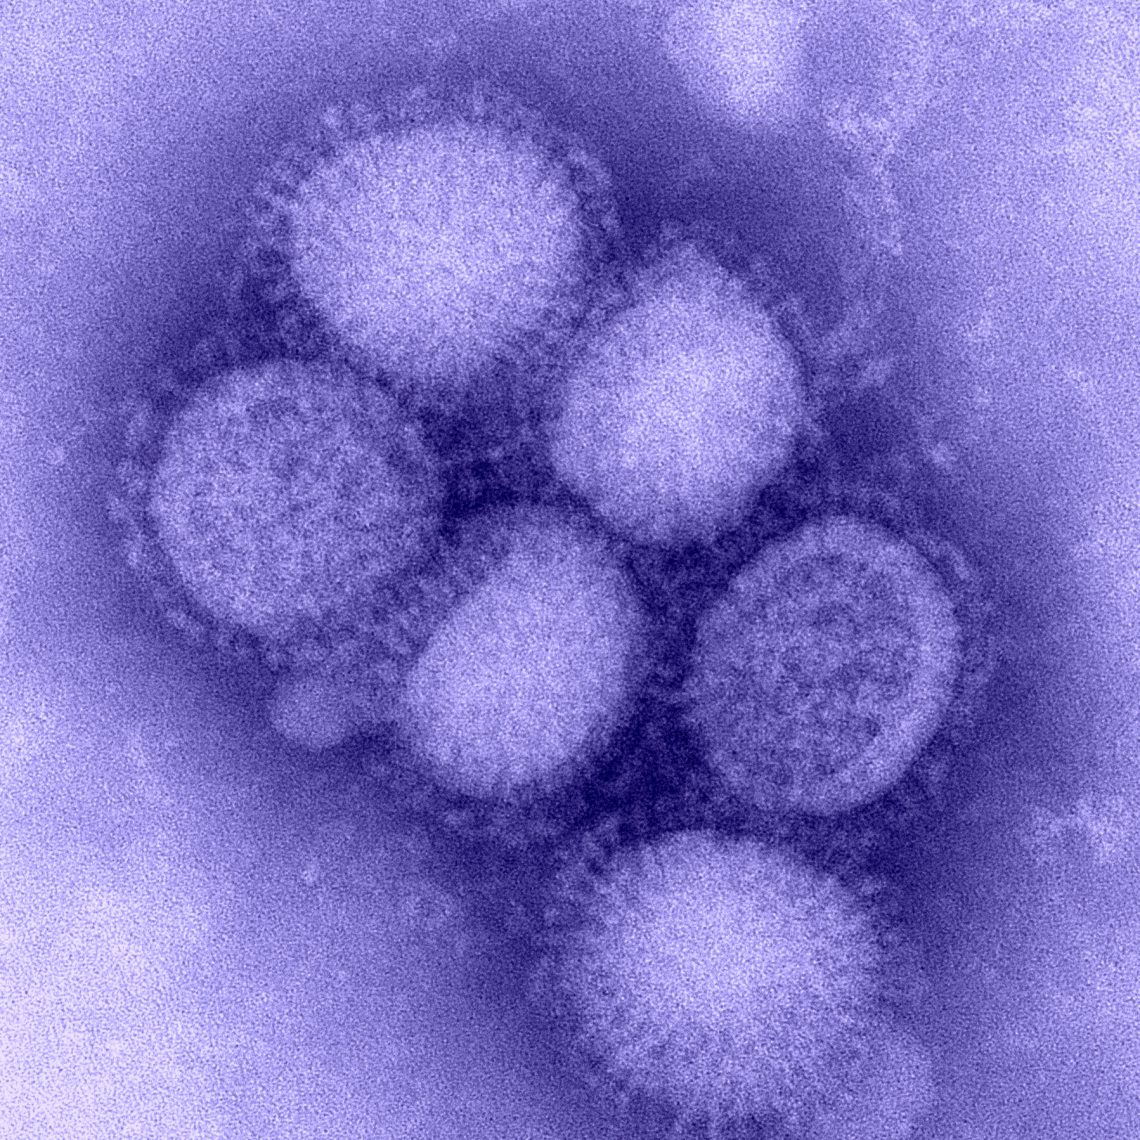 Información Sanitaria Gripe A H1N1